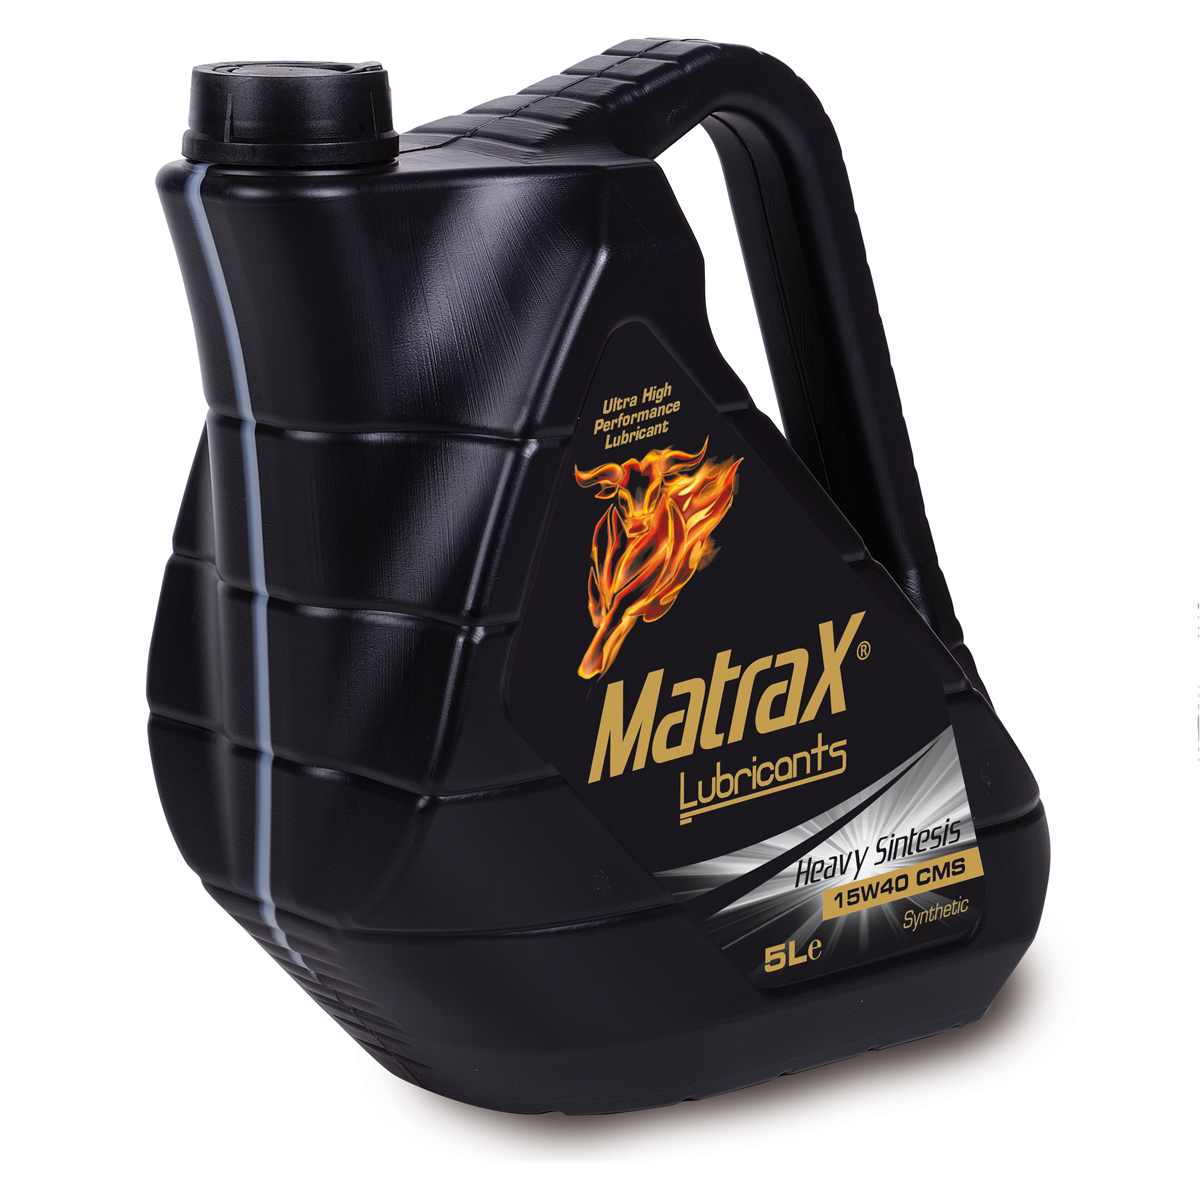 matrax-lubricants-heavy-sintesis-15w40-CMS-5l